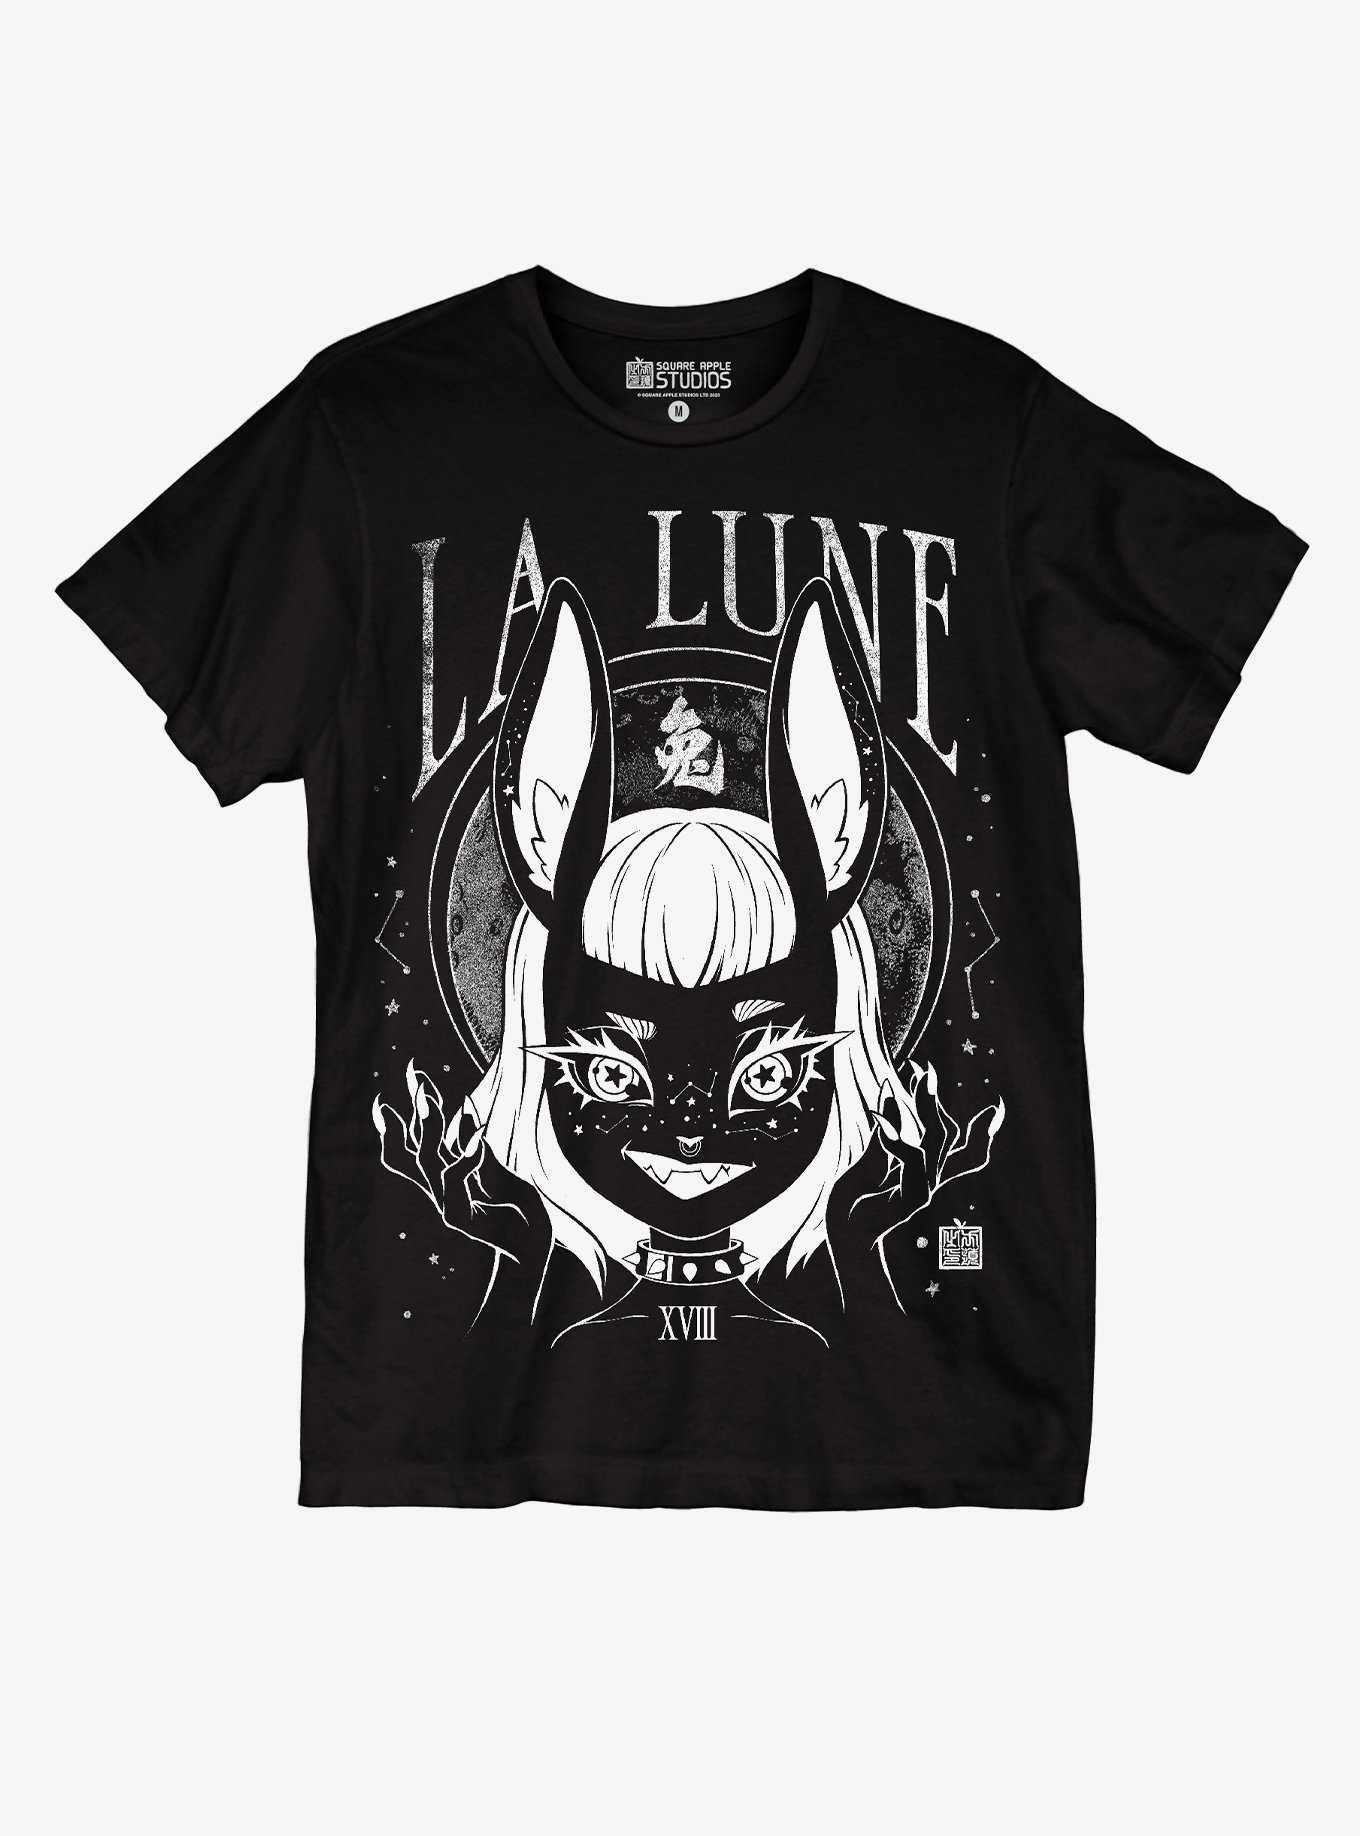 La Lune Rabbit Girl T-Shirt By Square Apple Studios, , hi-res